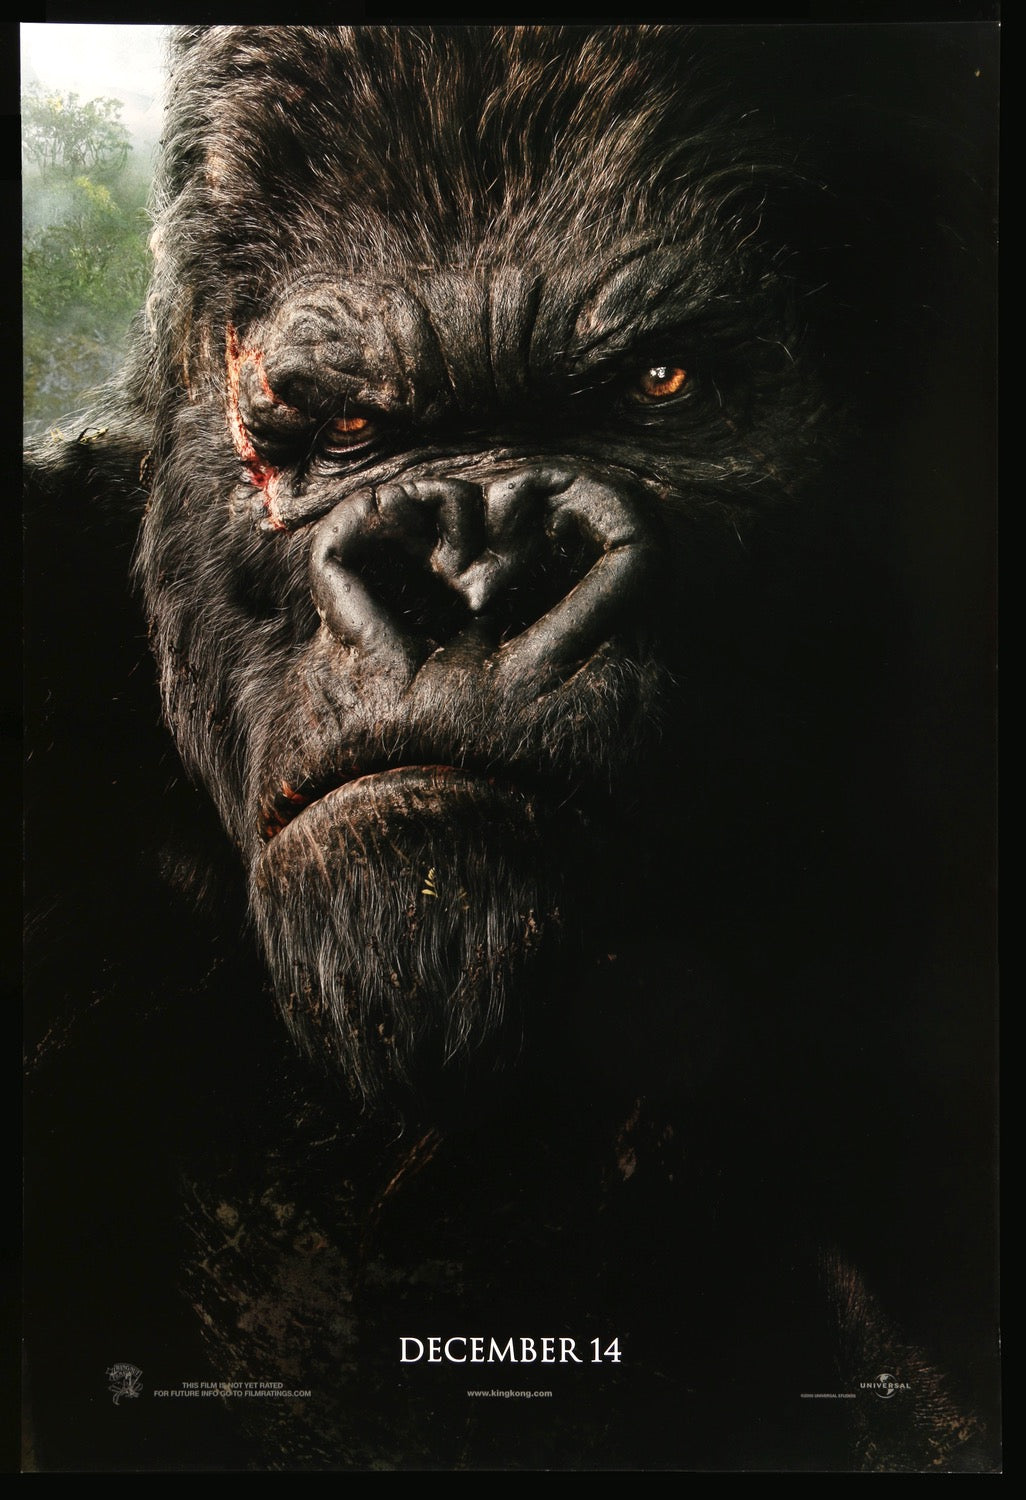 King Kong (2005) original movie poster for sale at Original Film Art